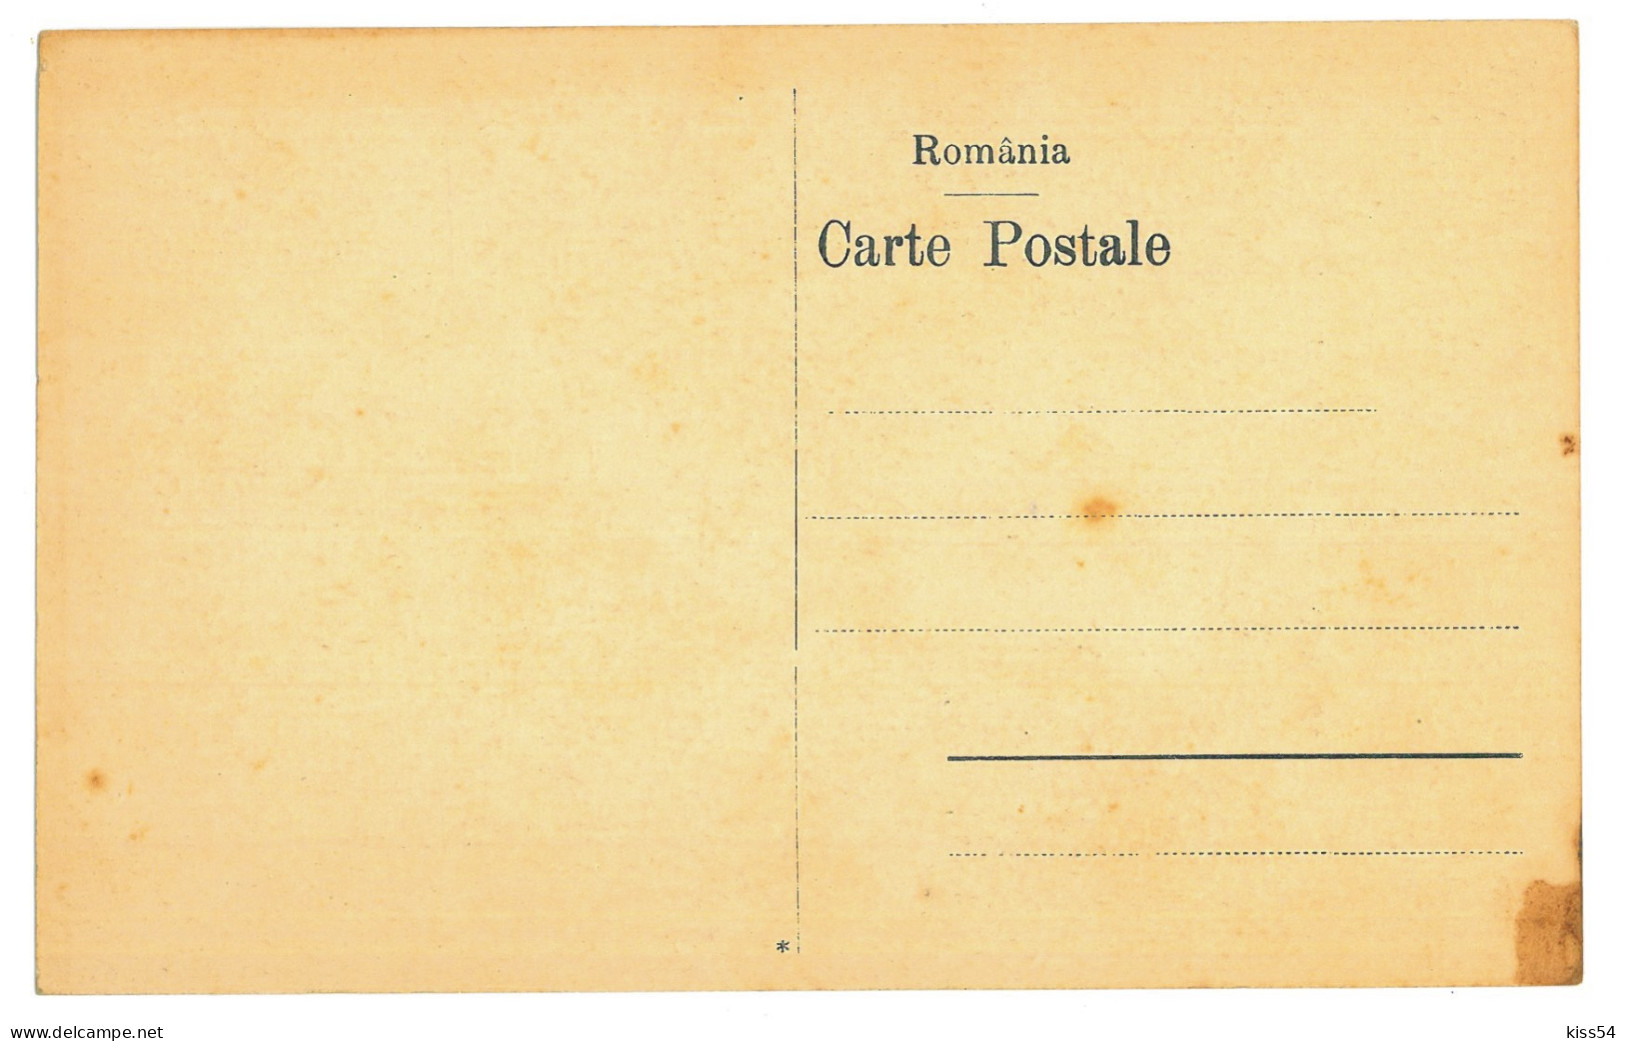 RO 83 - 24320 GORJ, Surduc Pass, Romania - Old Postcard - Unused - Rumänien